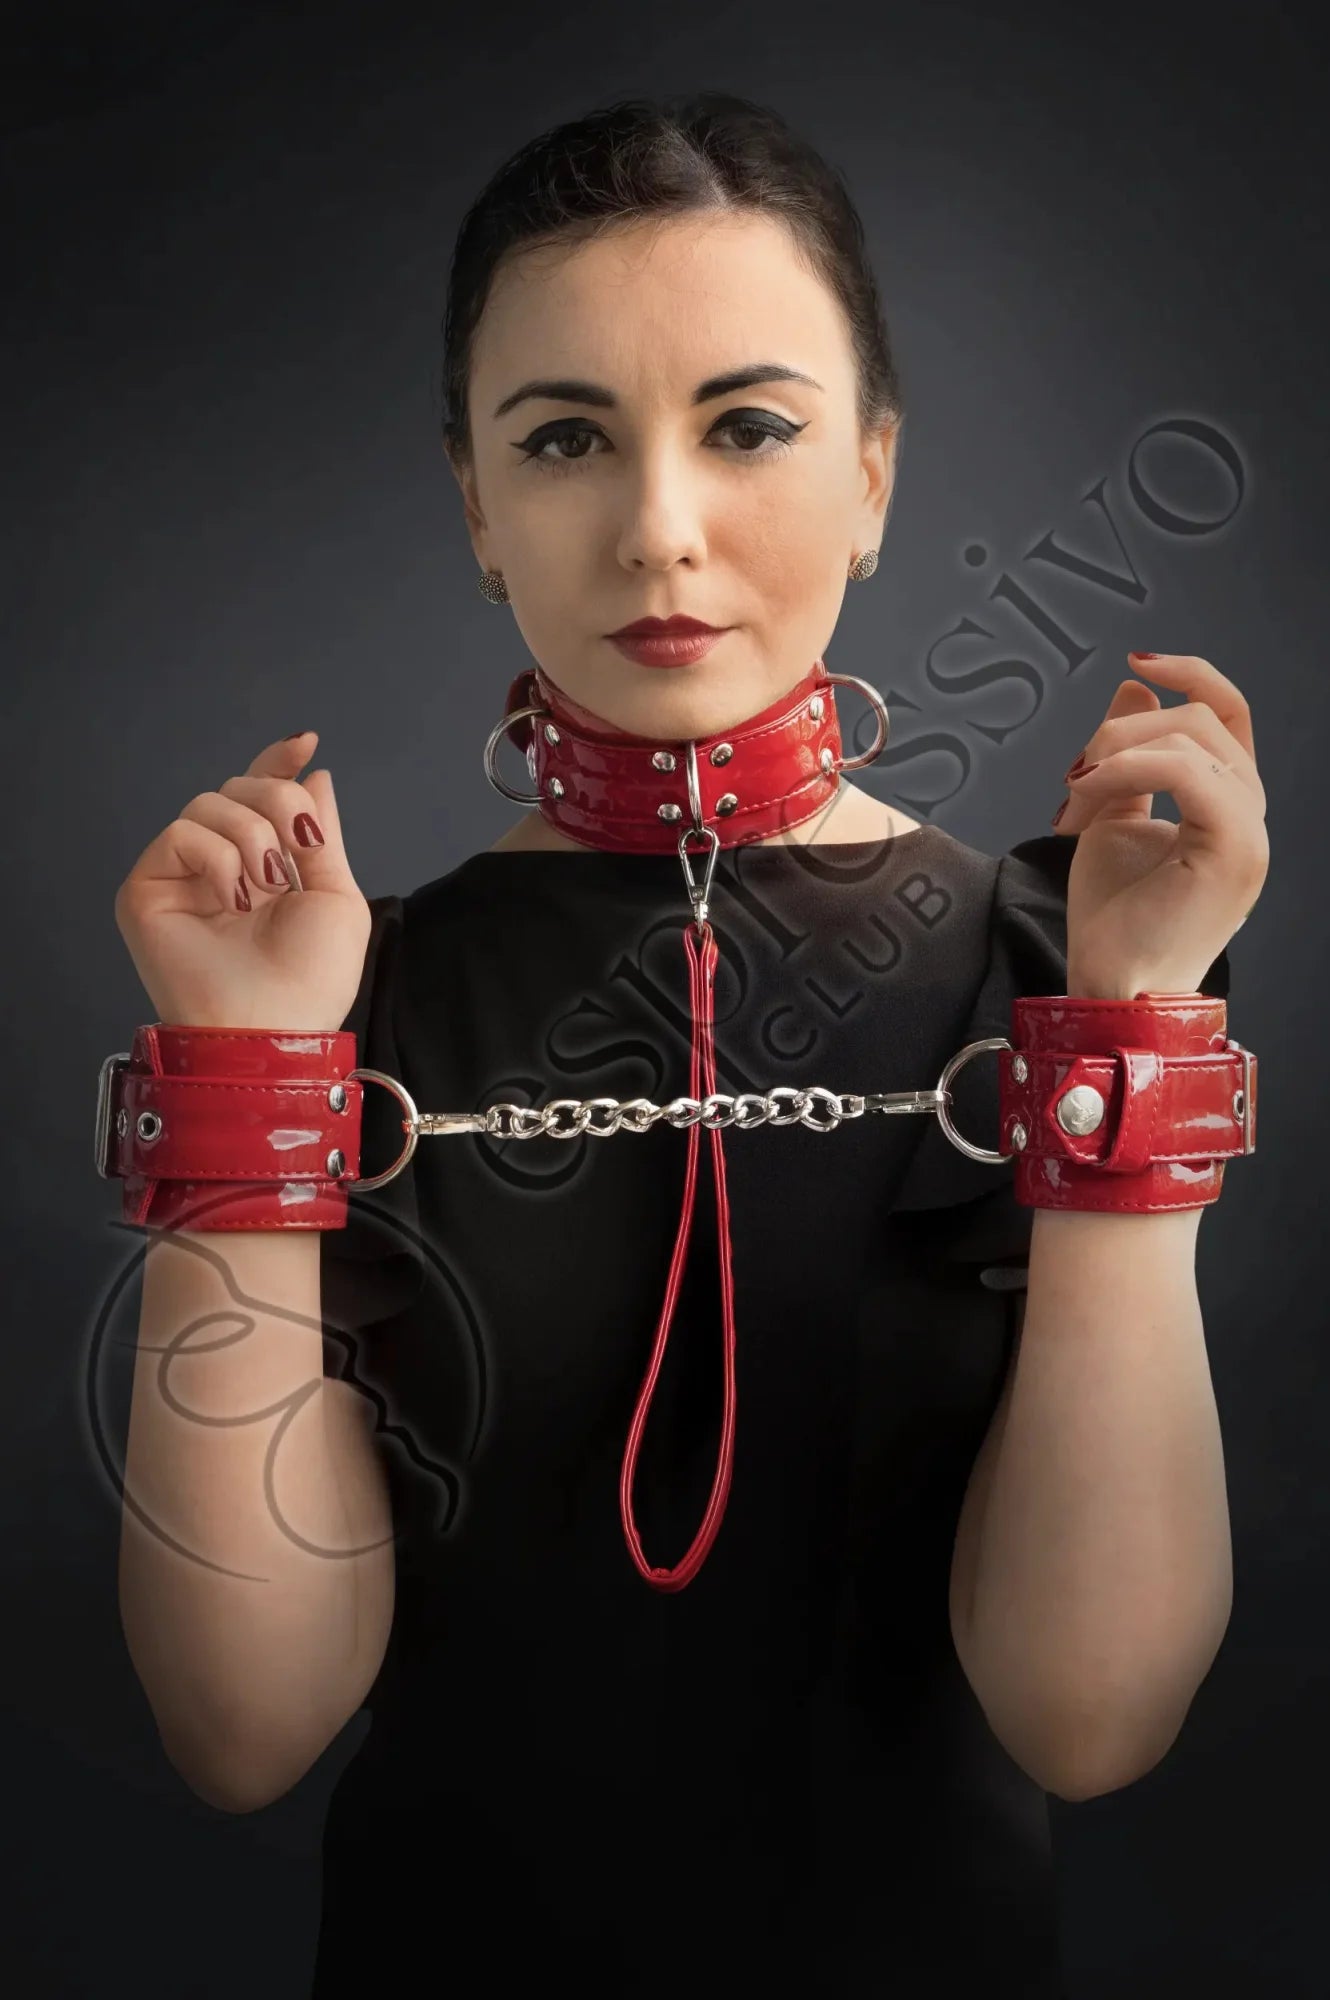 Bondage cuffs in Red PVC - Wrist & Ankle BDSM restraints